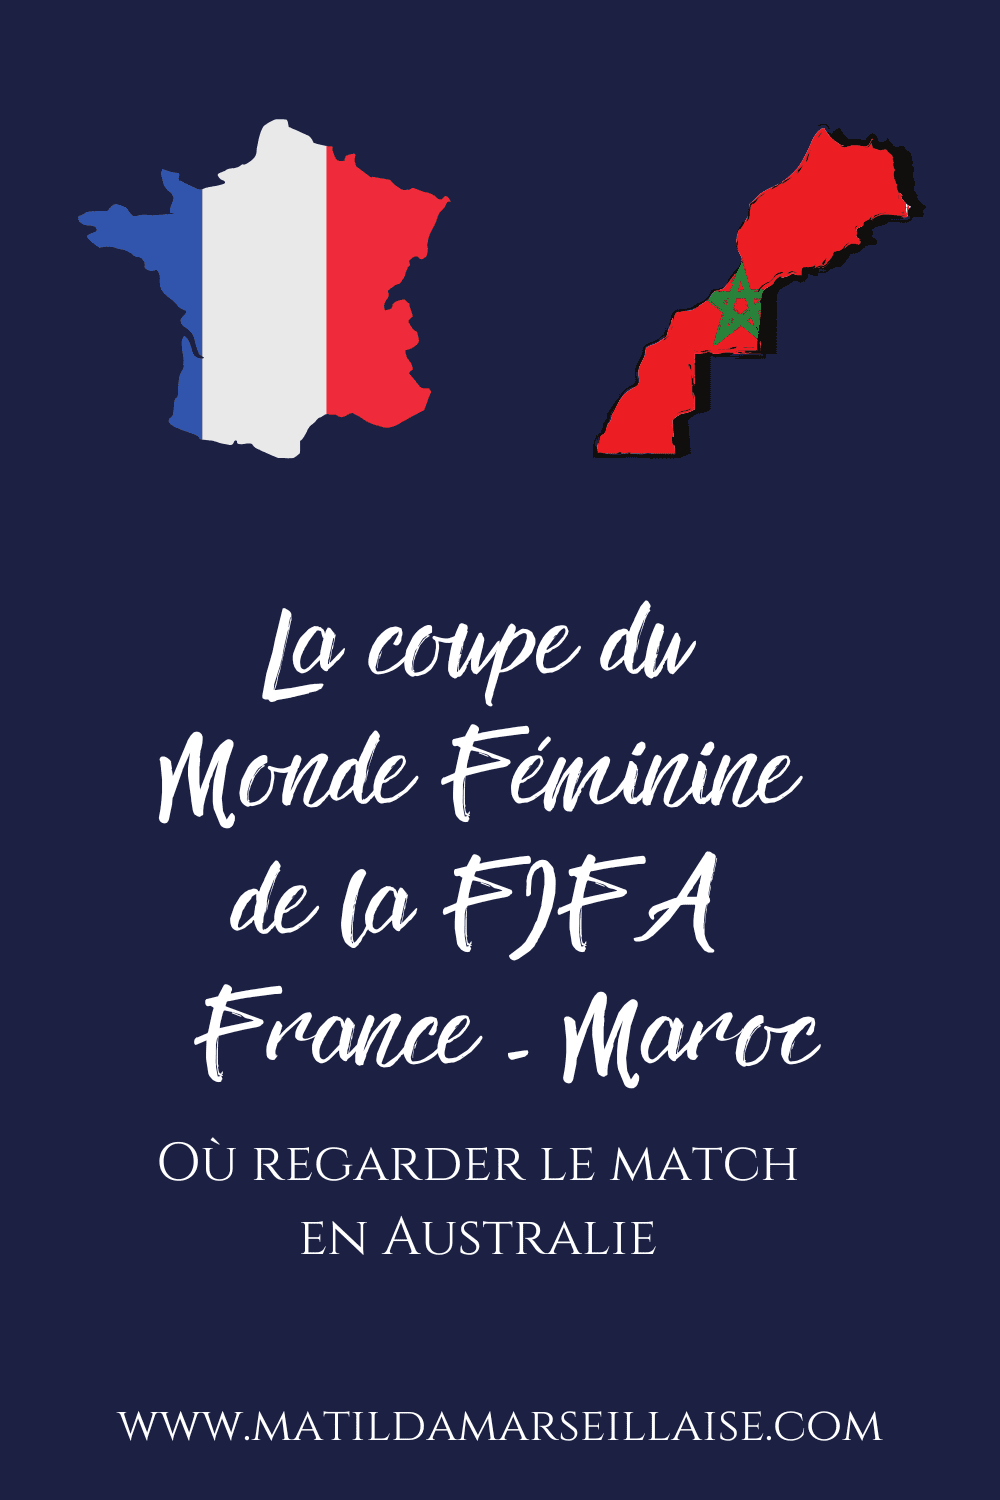 France - Maroc en Australie